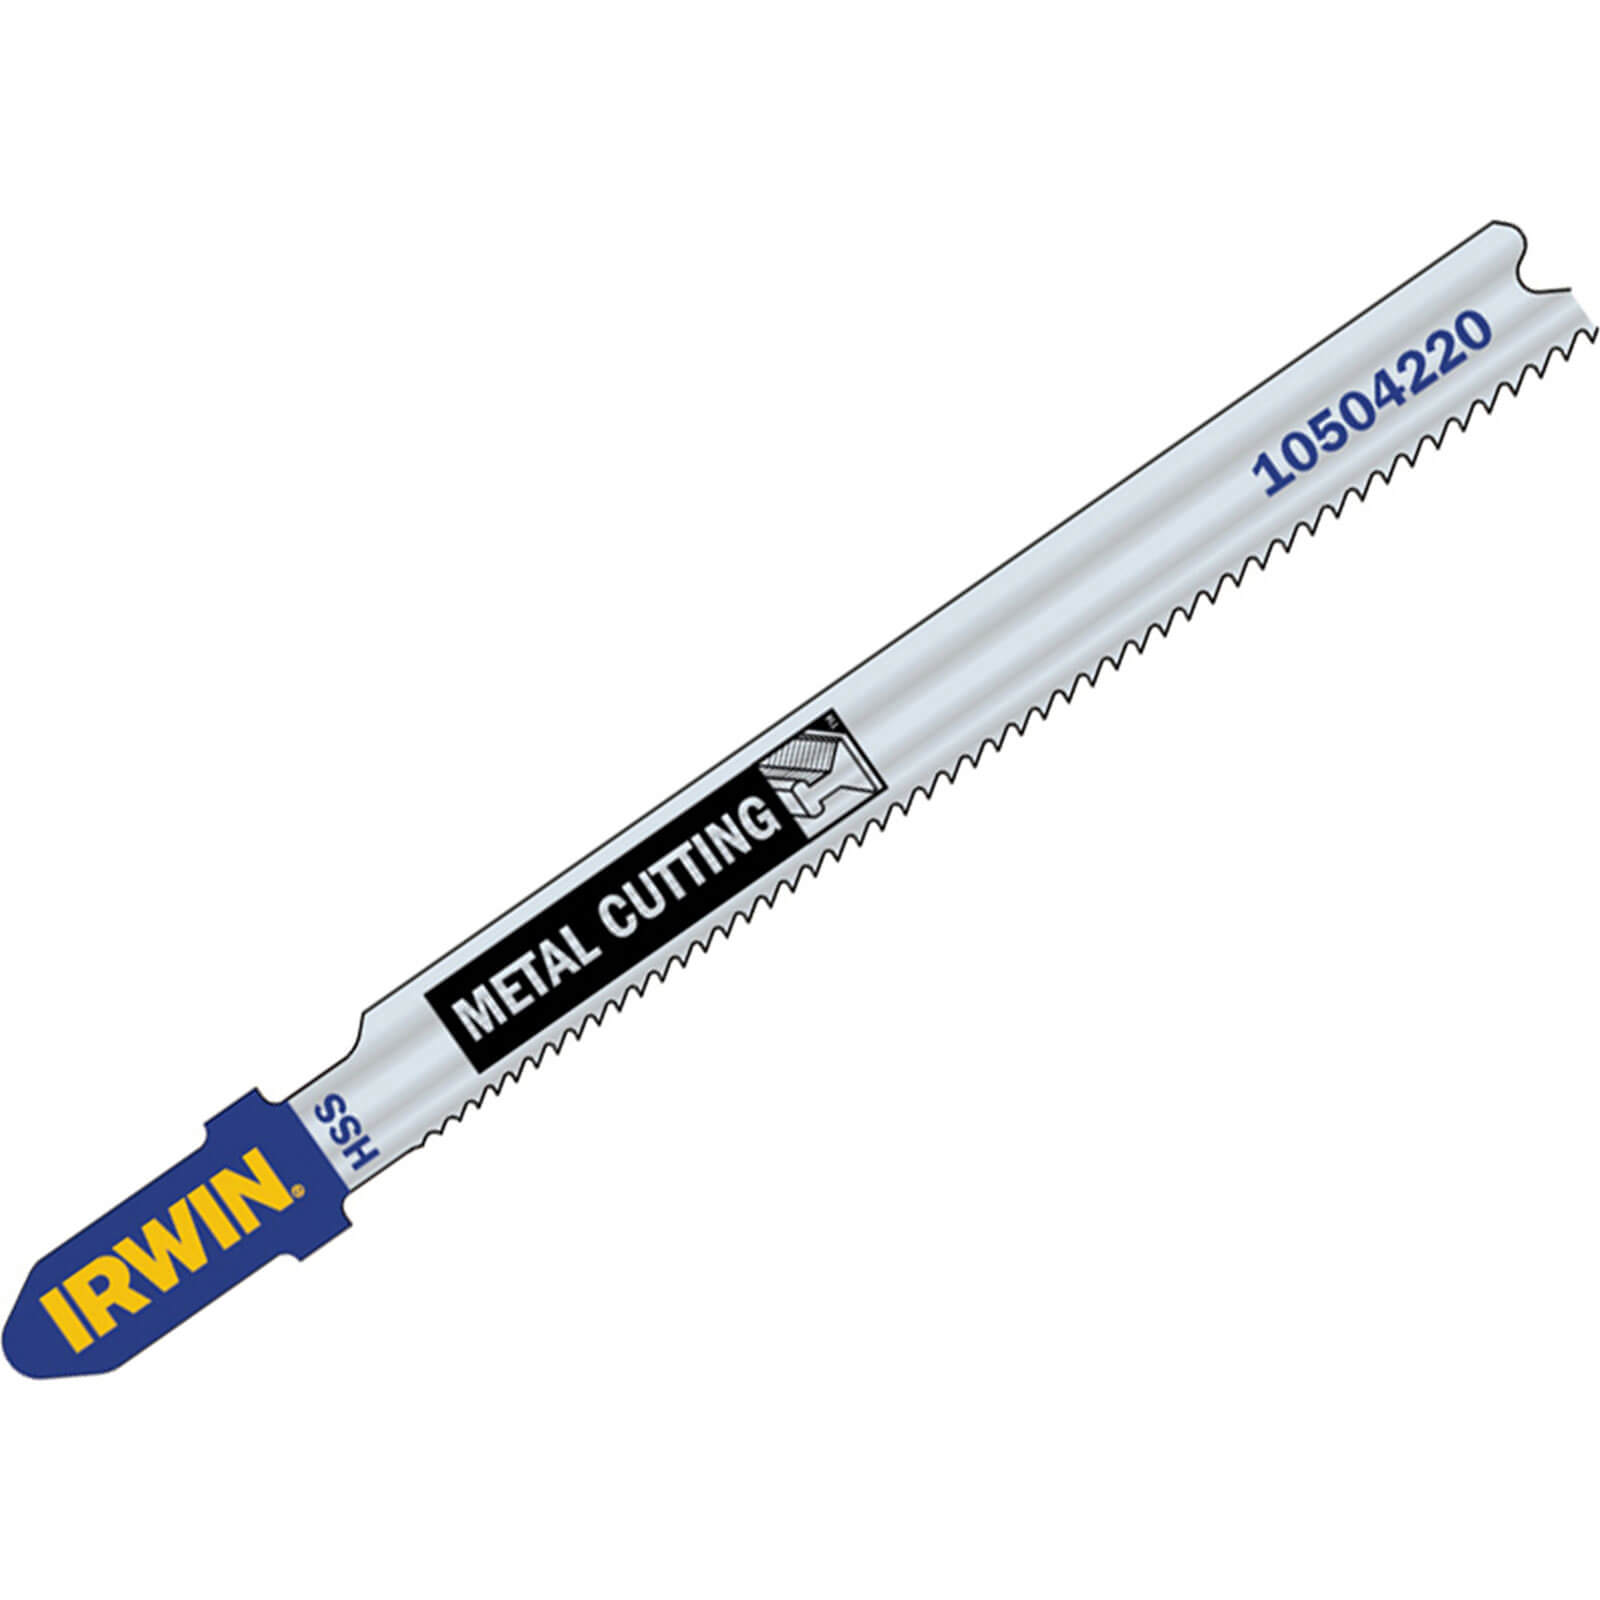 Photos - Power Tool Accessory IRWIN T118B T Shank Metal Cutting Jigsaw Blades Pack of 5 IRW10504225 